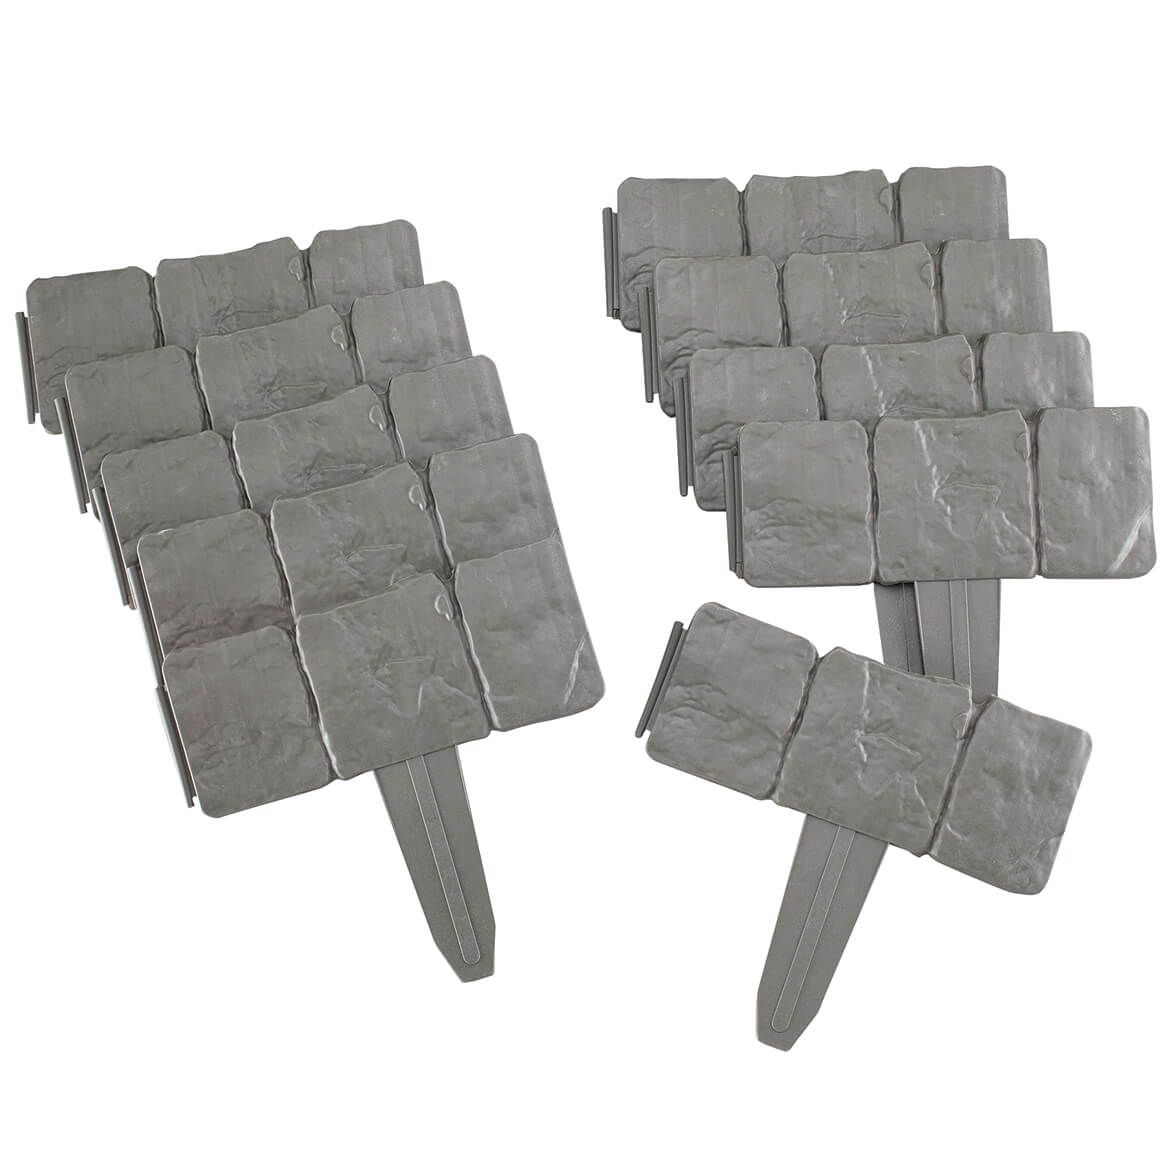 Plastic Rock Fencing, Set of 10 + '-' + 371950